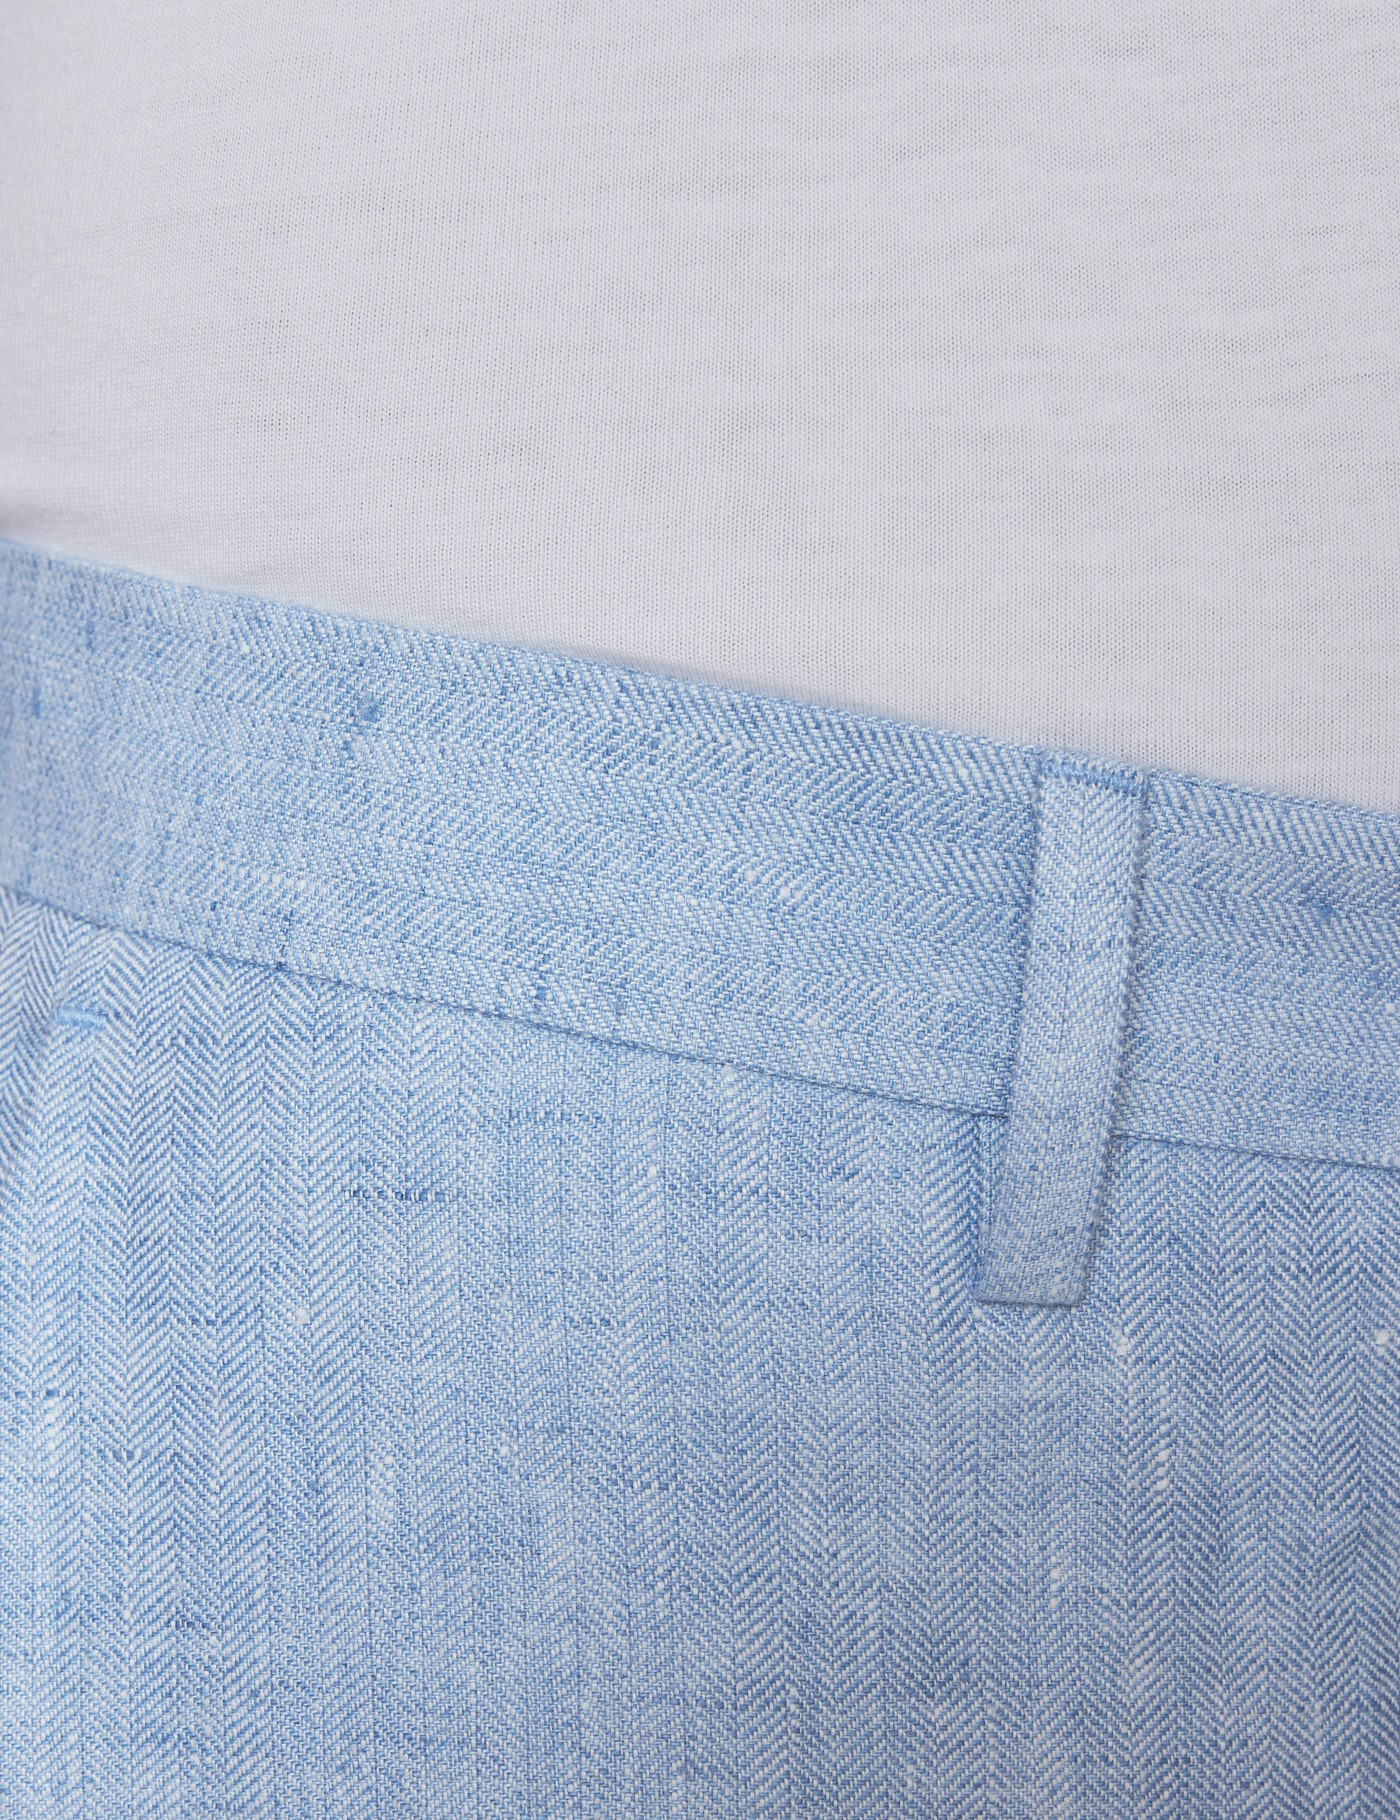 Men's Light Blue Herringbone Italian Linen Shorts – 1913 Collection ...